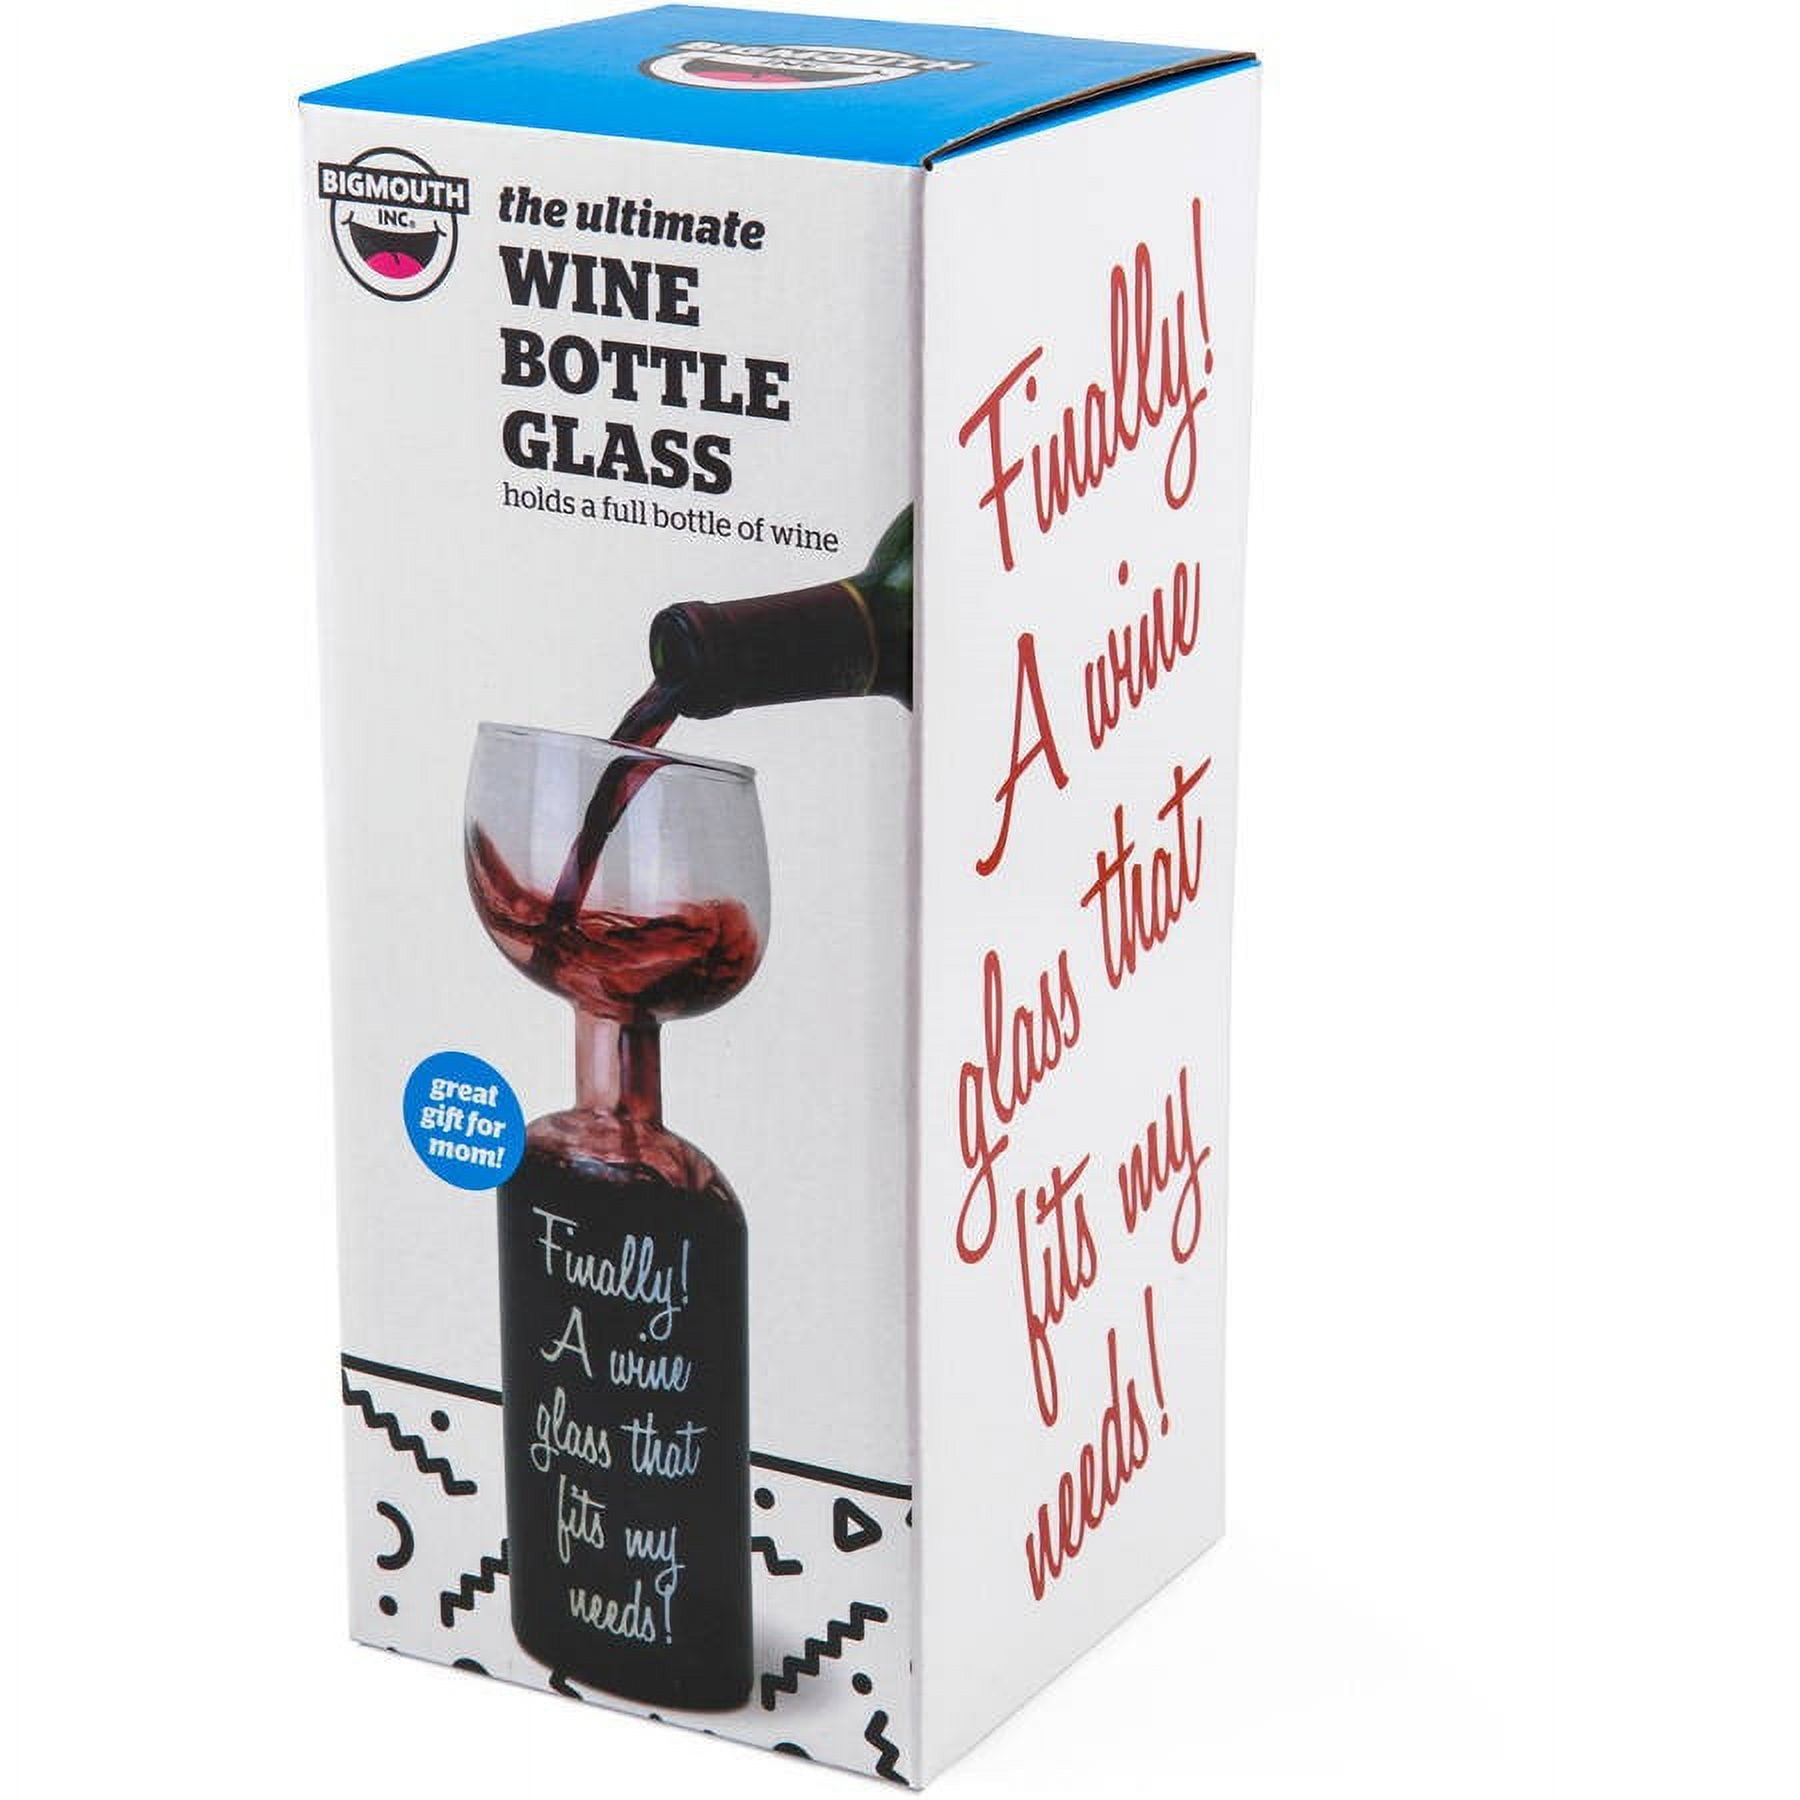 Bigmouth Inc Wine Bottle Glass, Size: One Size